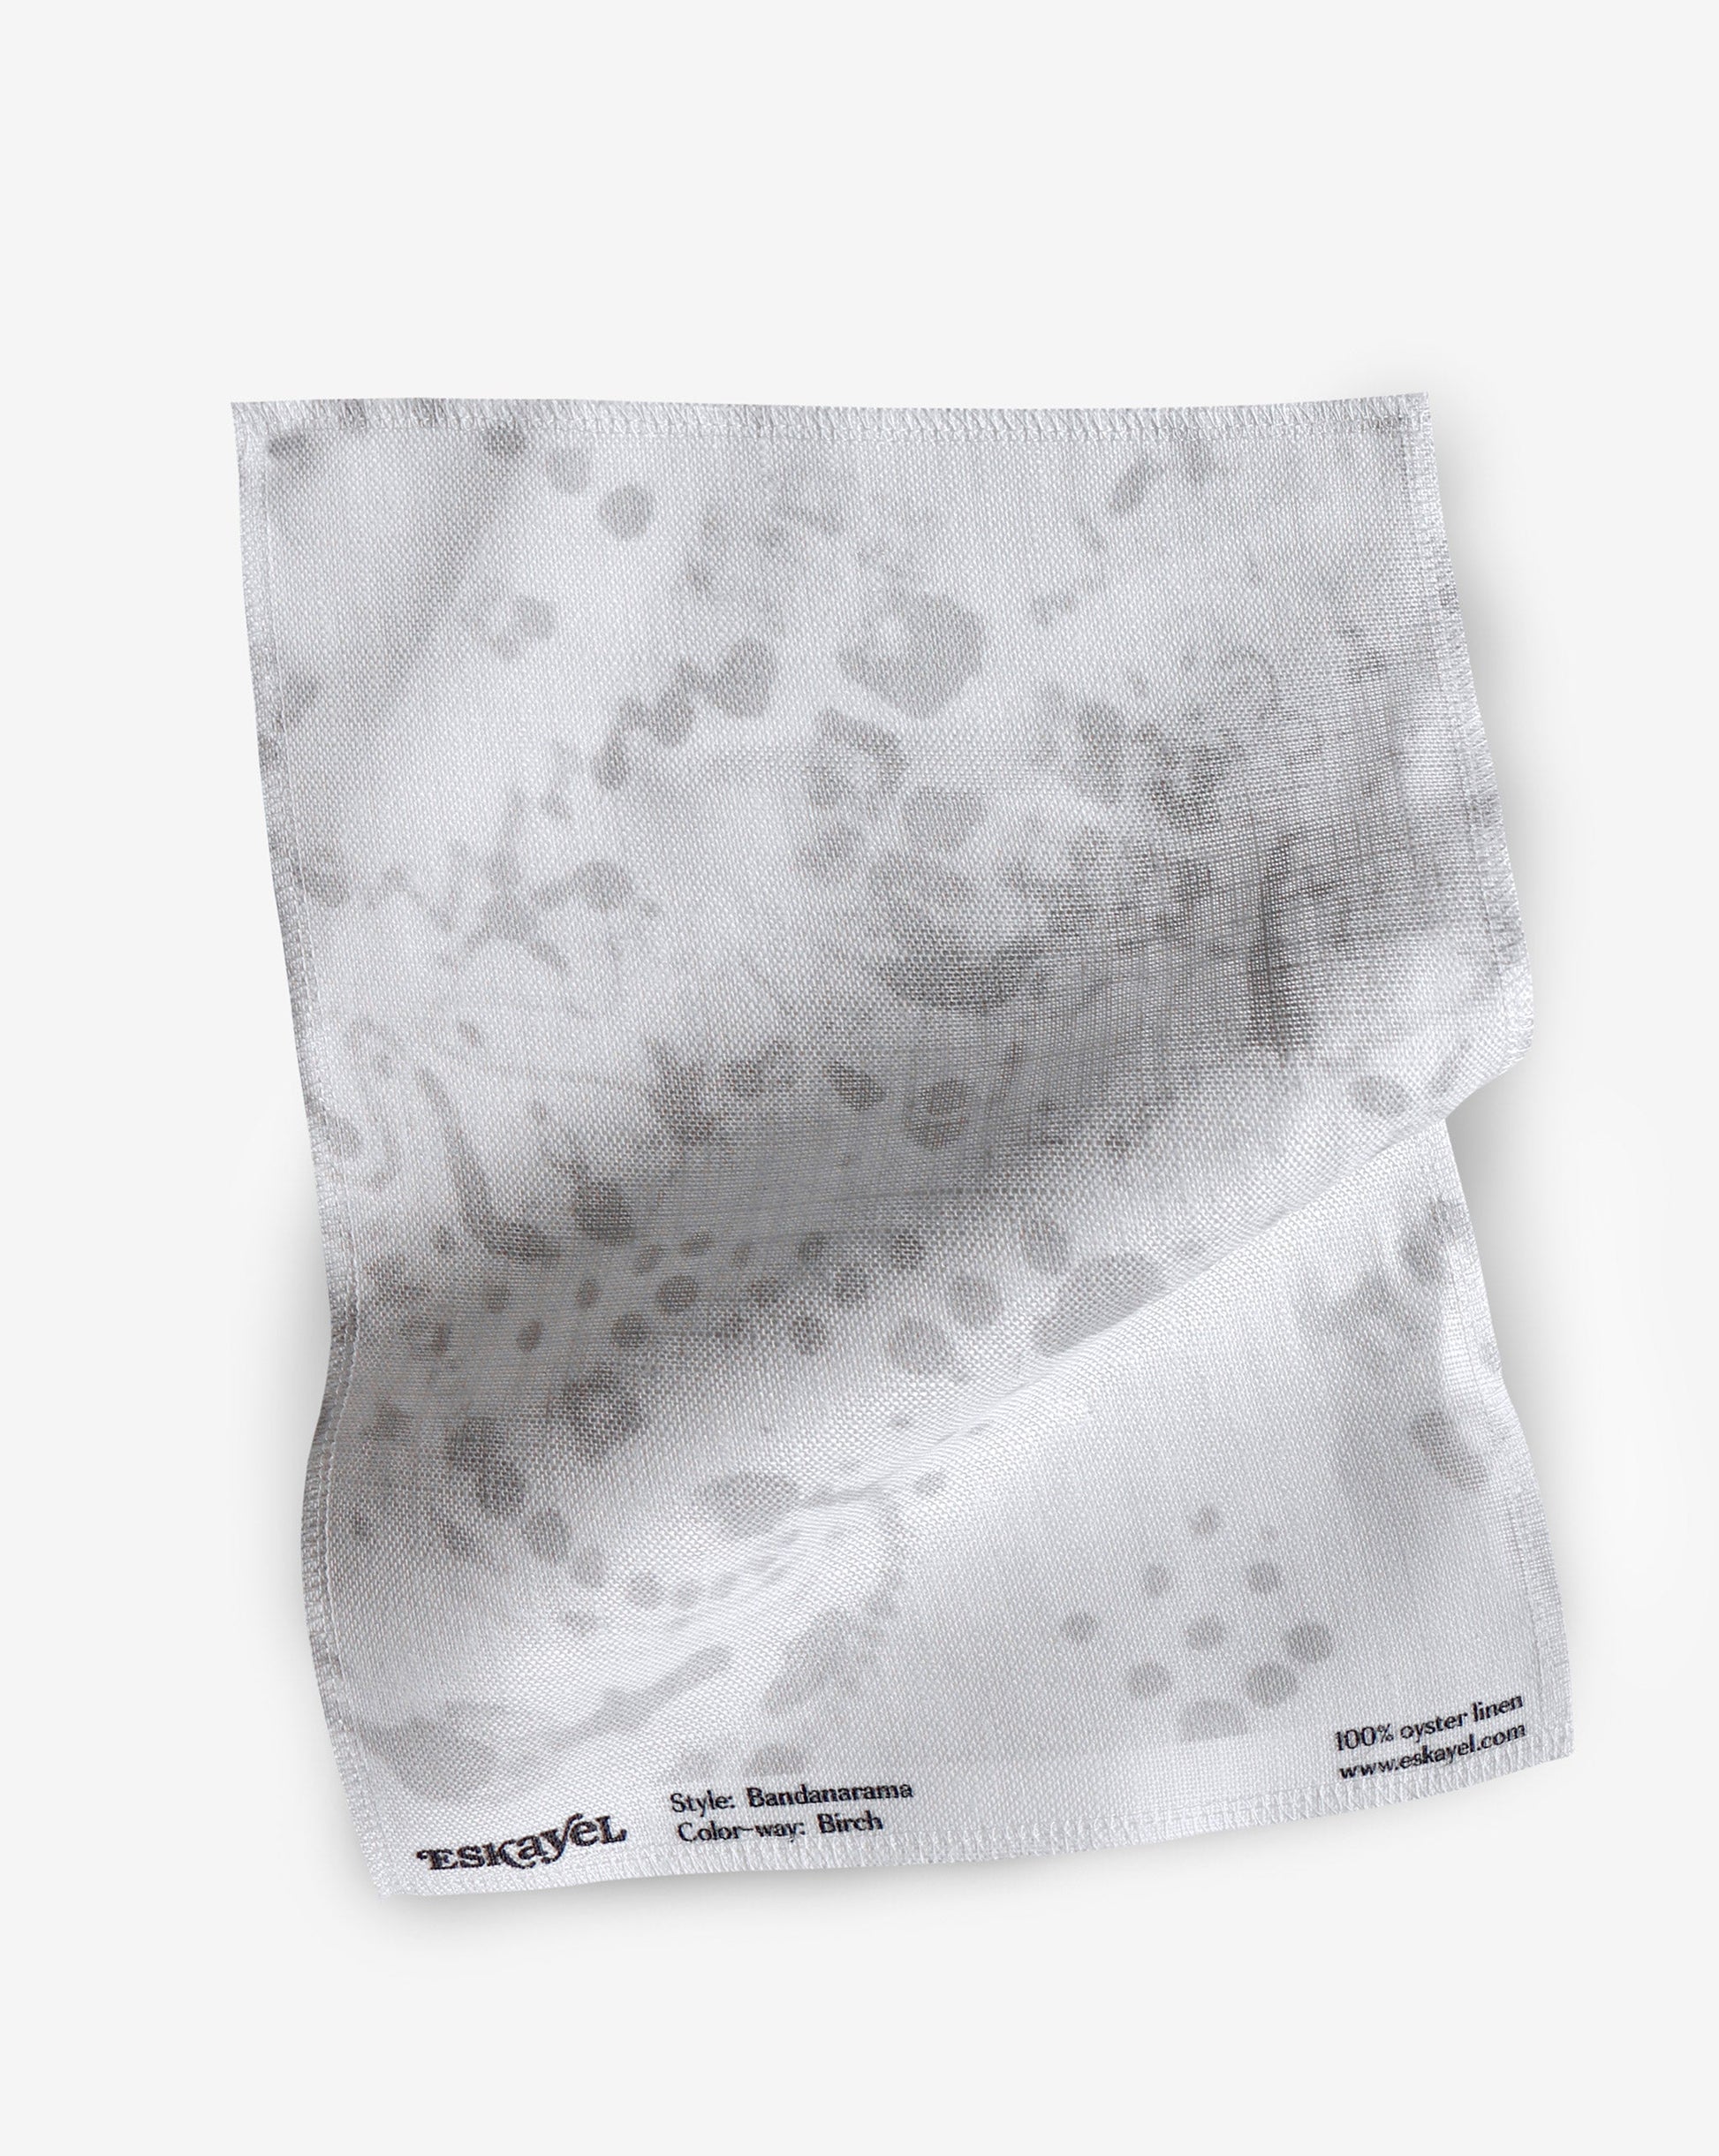 Order a Bandanarama Fabric Sample||Birch with black spots on it.